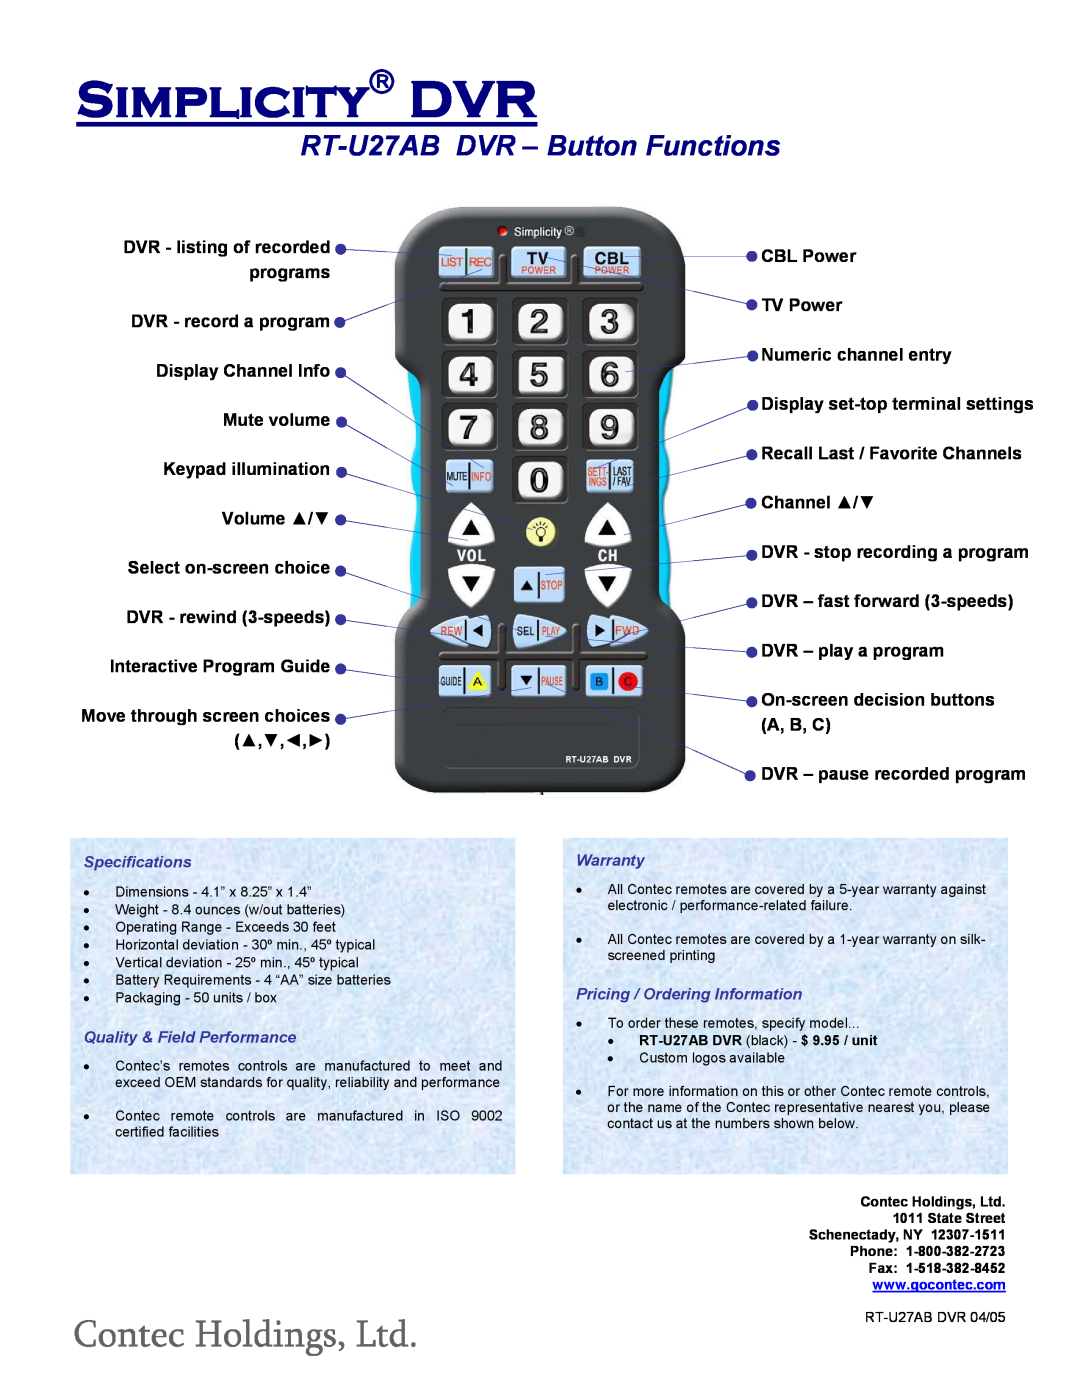 Motorola manual Simplicity→ DVR, RT-U27AB DVR - Button Functions 